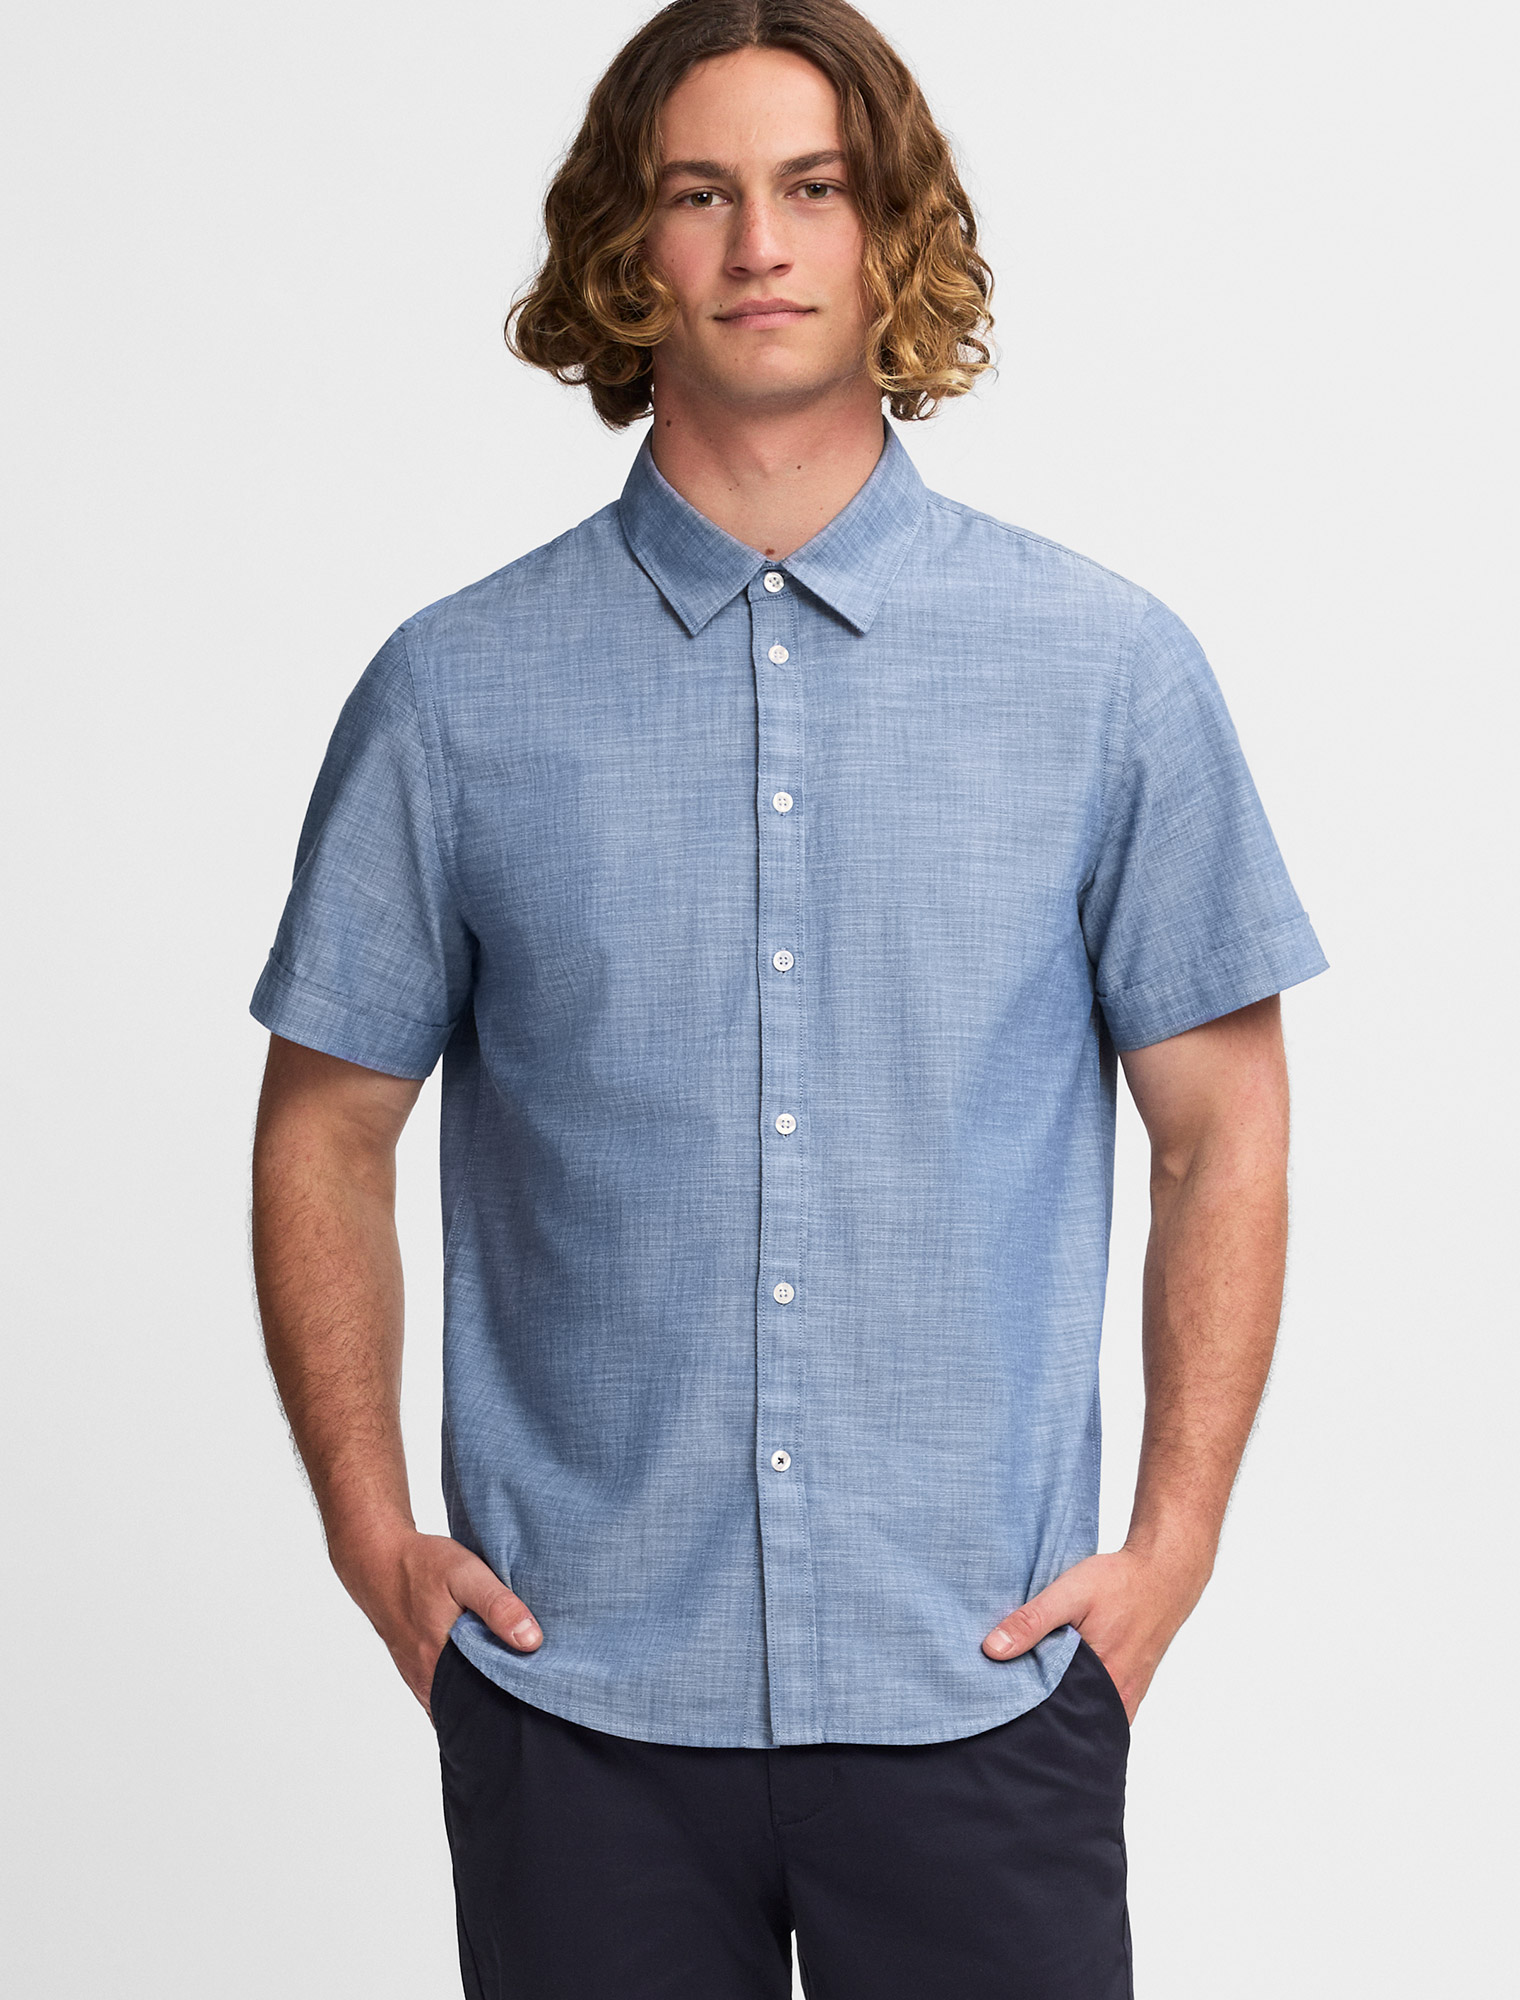 Fred Men's Short Sleeve Shirt - Chambray Blue